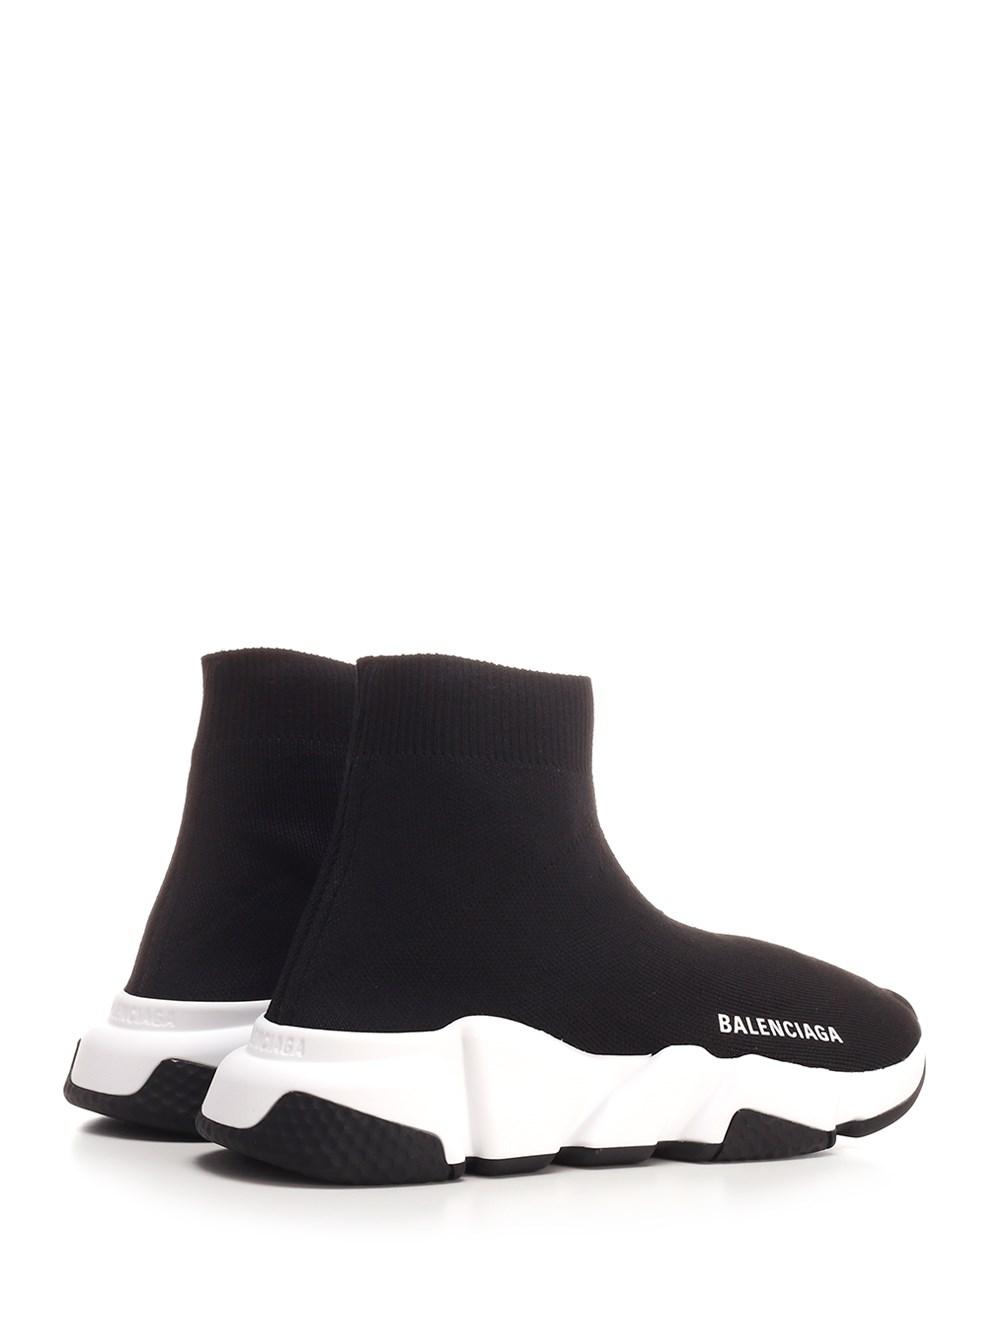 Balenciaga "speed" Slip On Sneakers in White | Lyst